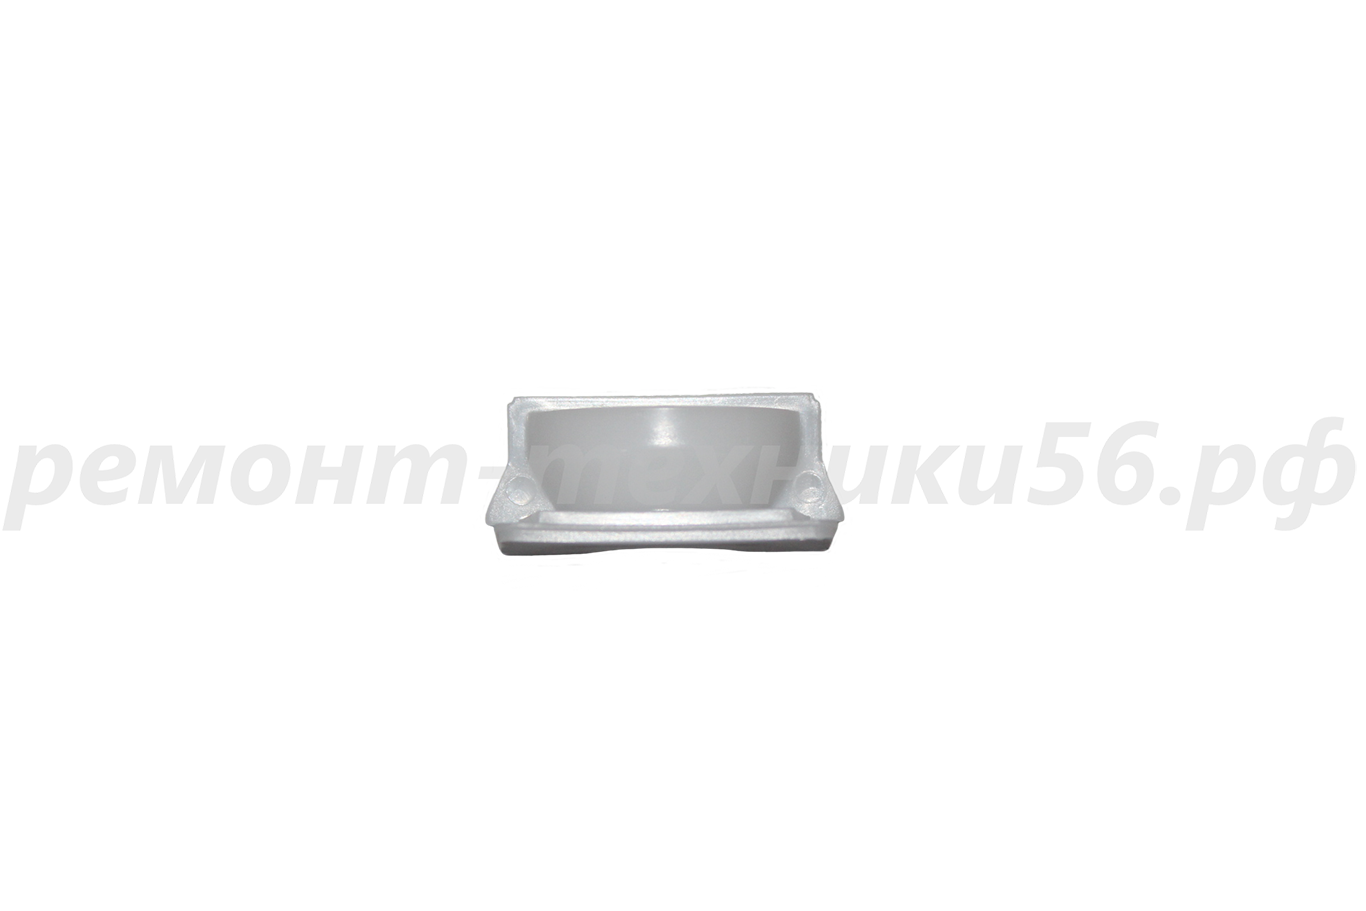 Подшипник скольжения передний Electrolux EHAW - 6515 (white) по лучшей цене фото8